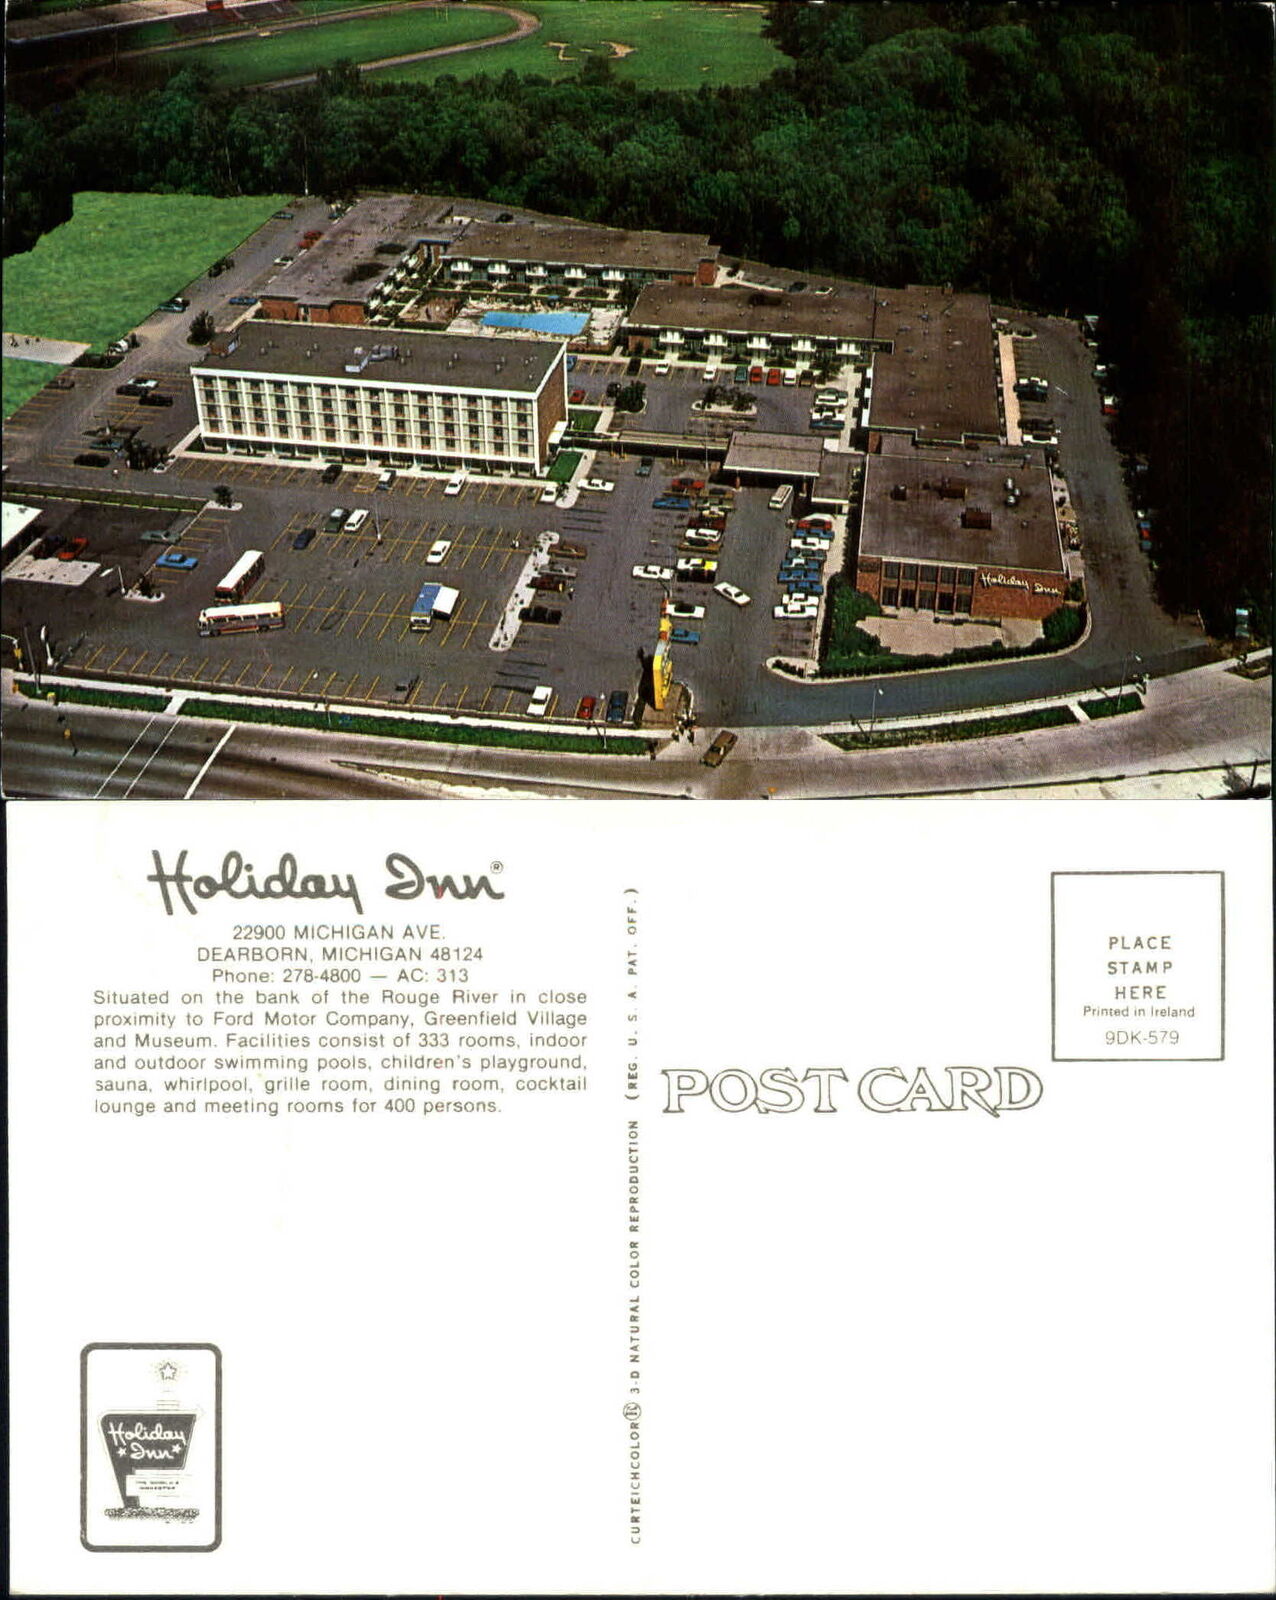 Holiday Inn Dearborn Michigan MI aerial view 1970s postcard